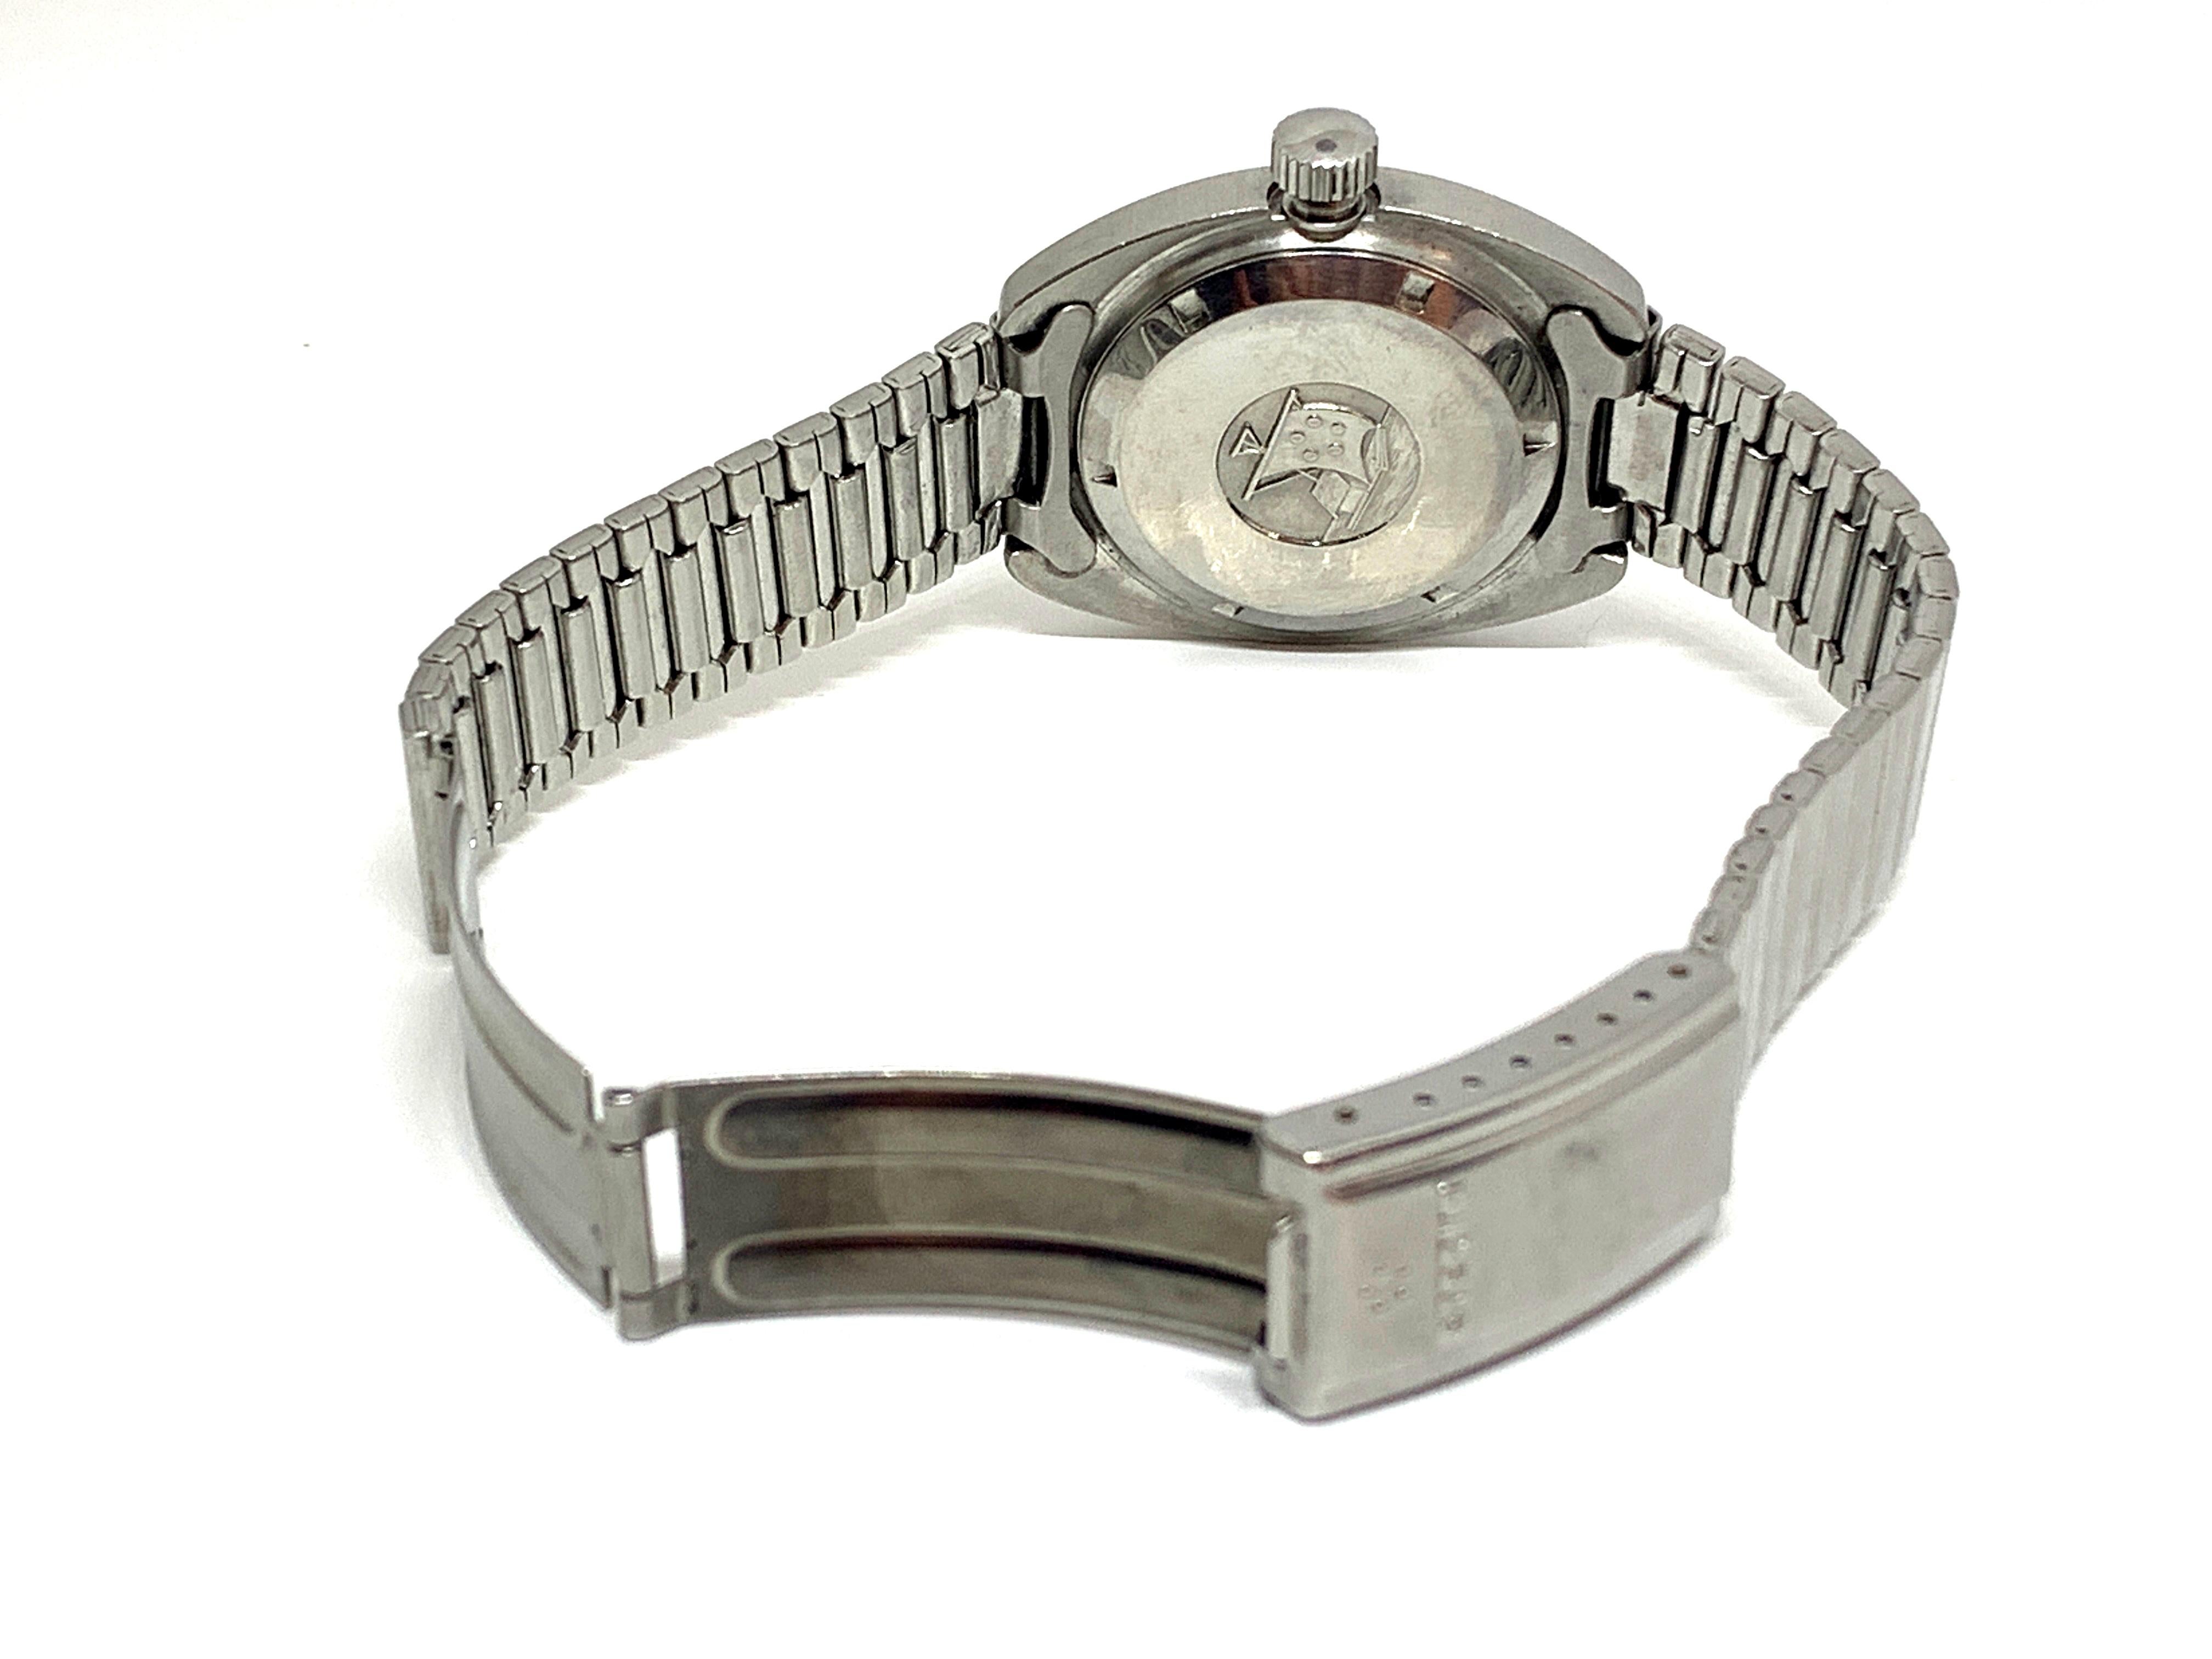 Eterna-Matic
Kontiki 20
Around 1970
Steel case
Hand-wound mechanical movement
Diam: 36mm
Steel bracelet signed
790 euros